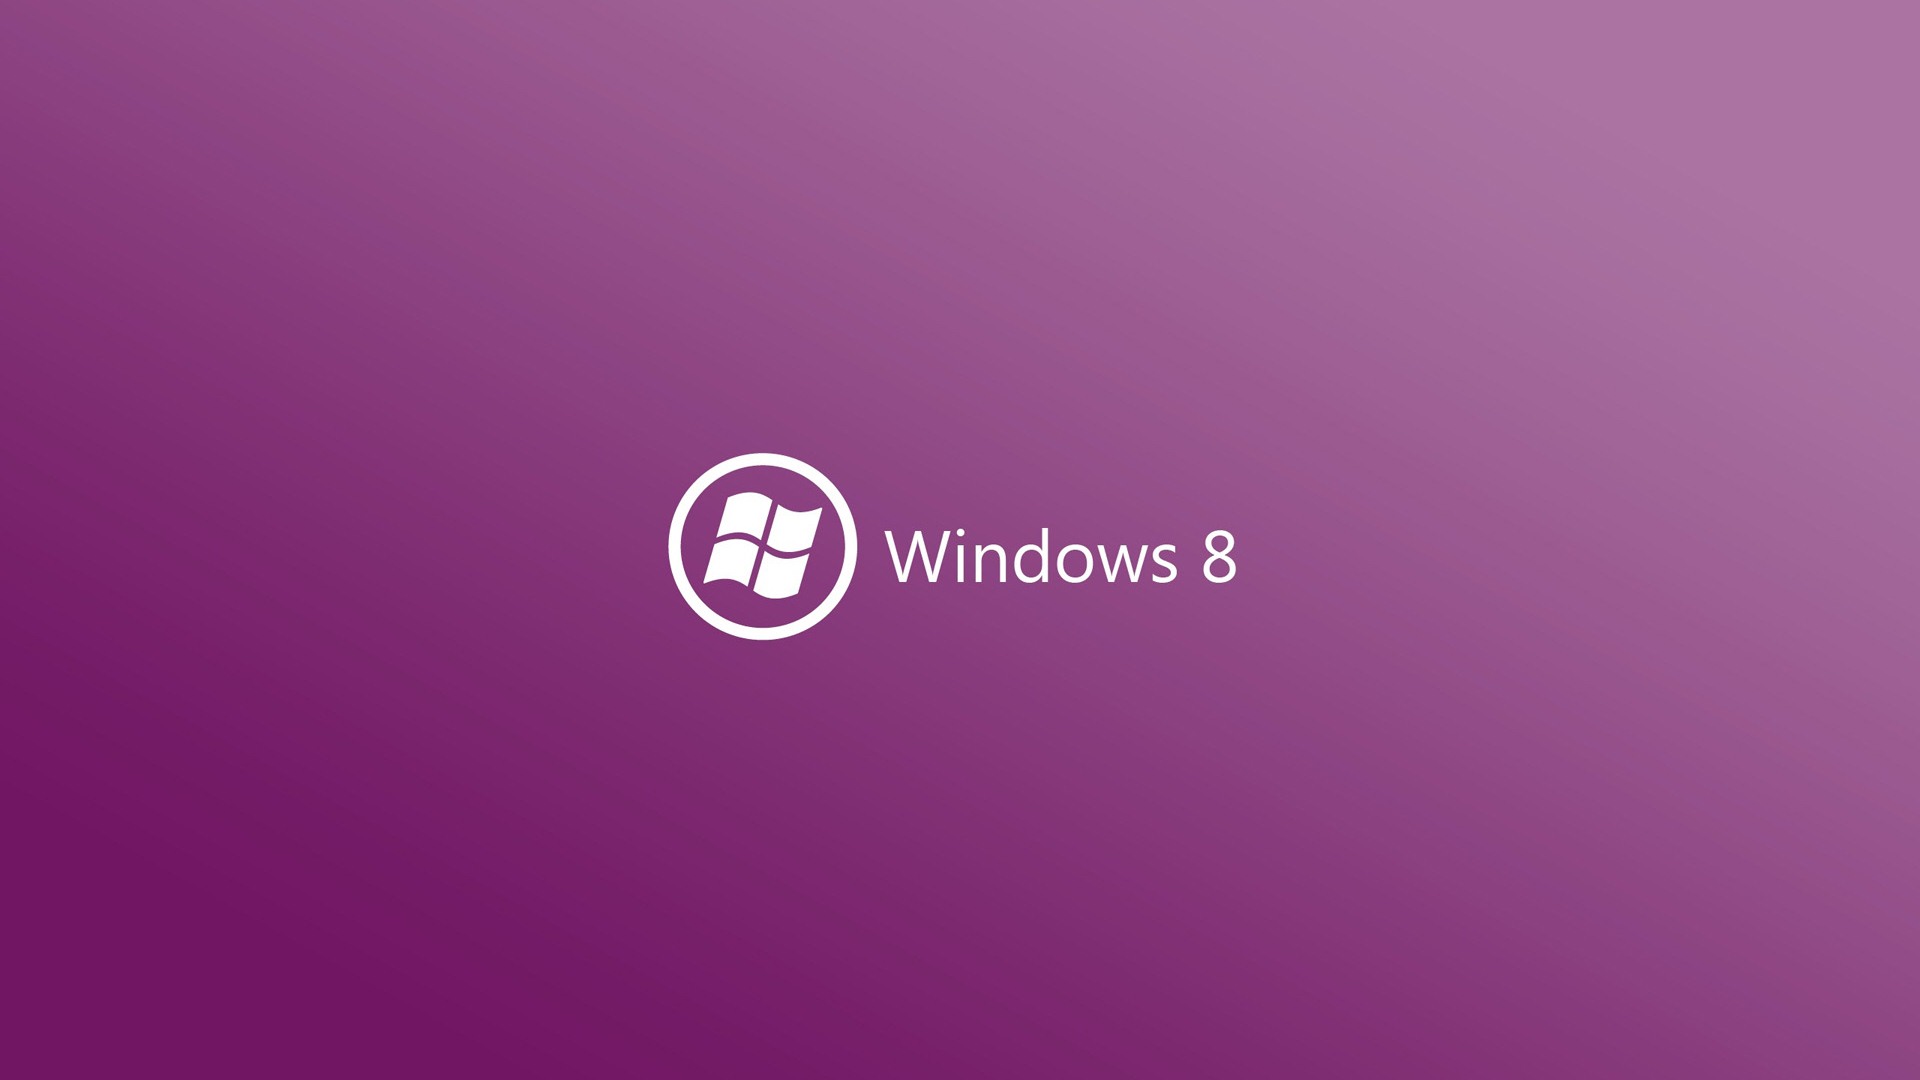 Windows 8 主题壁纸 (二)11 - 1920x1080